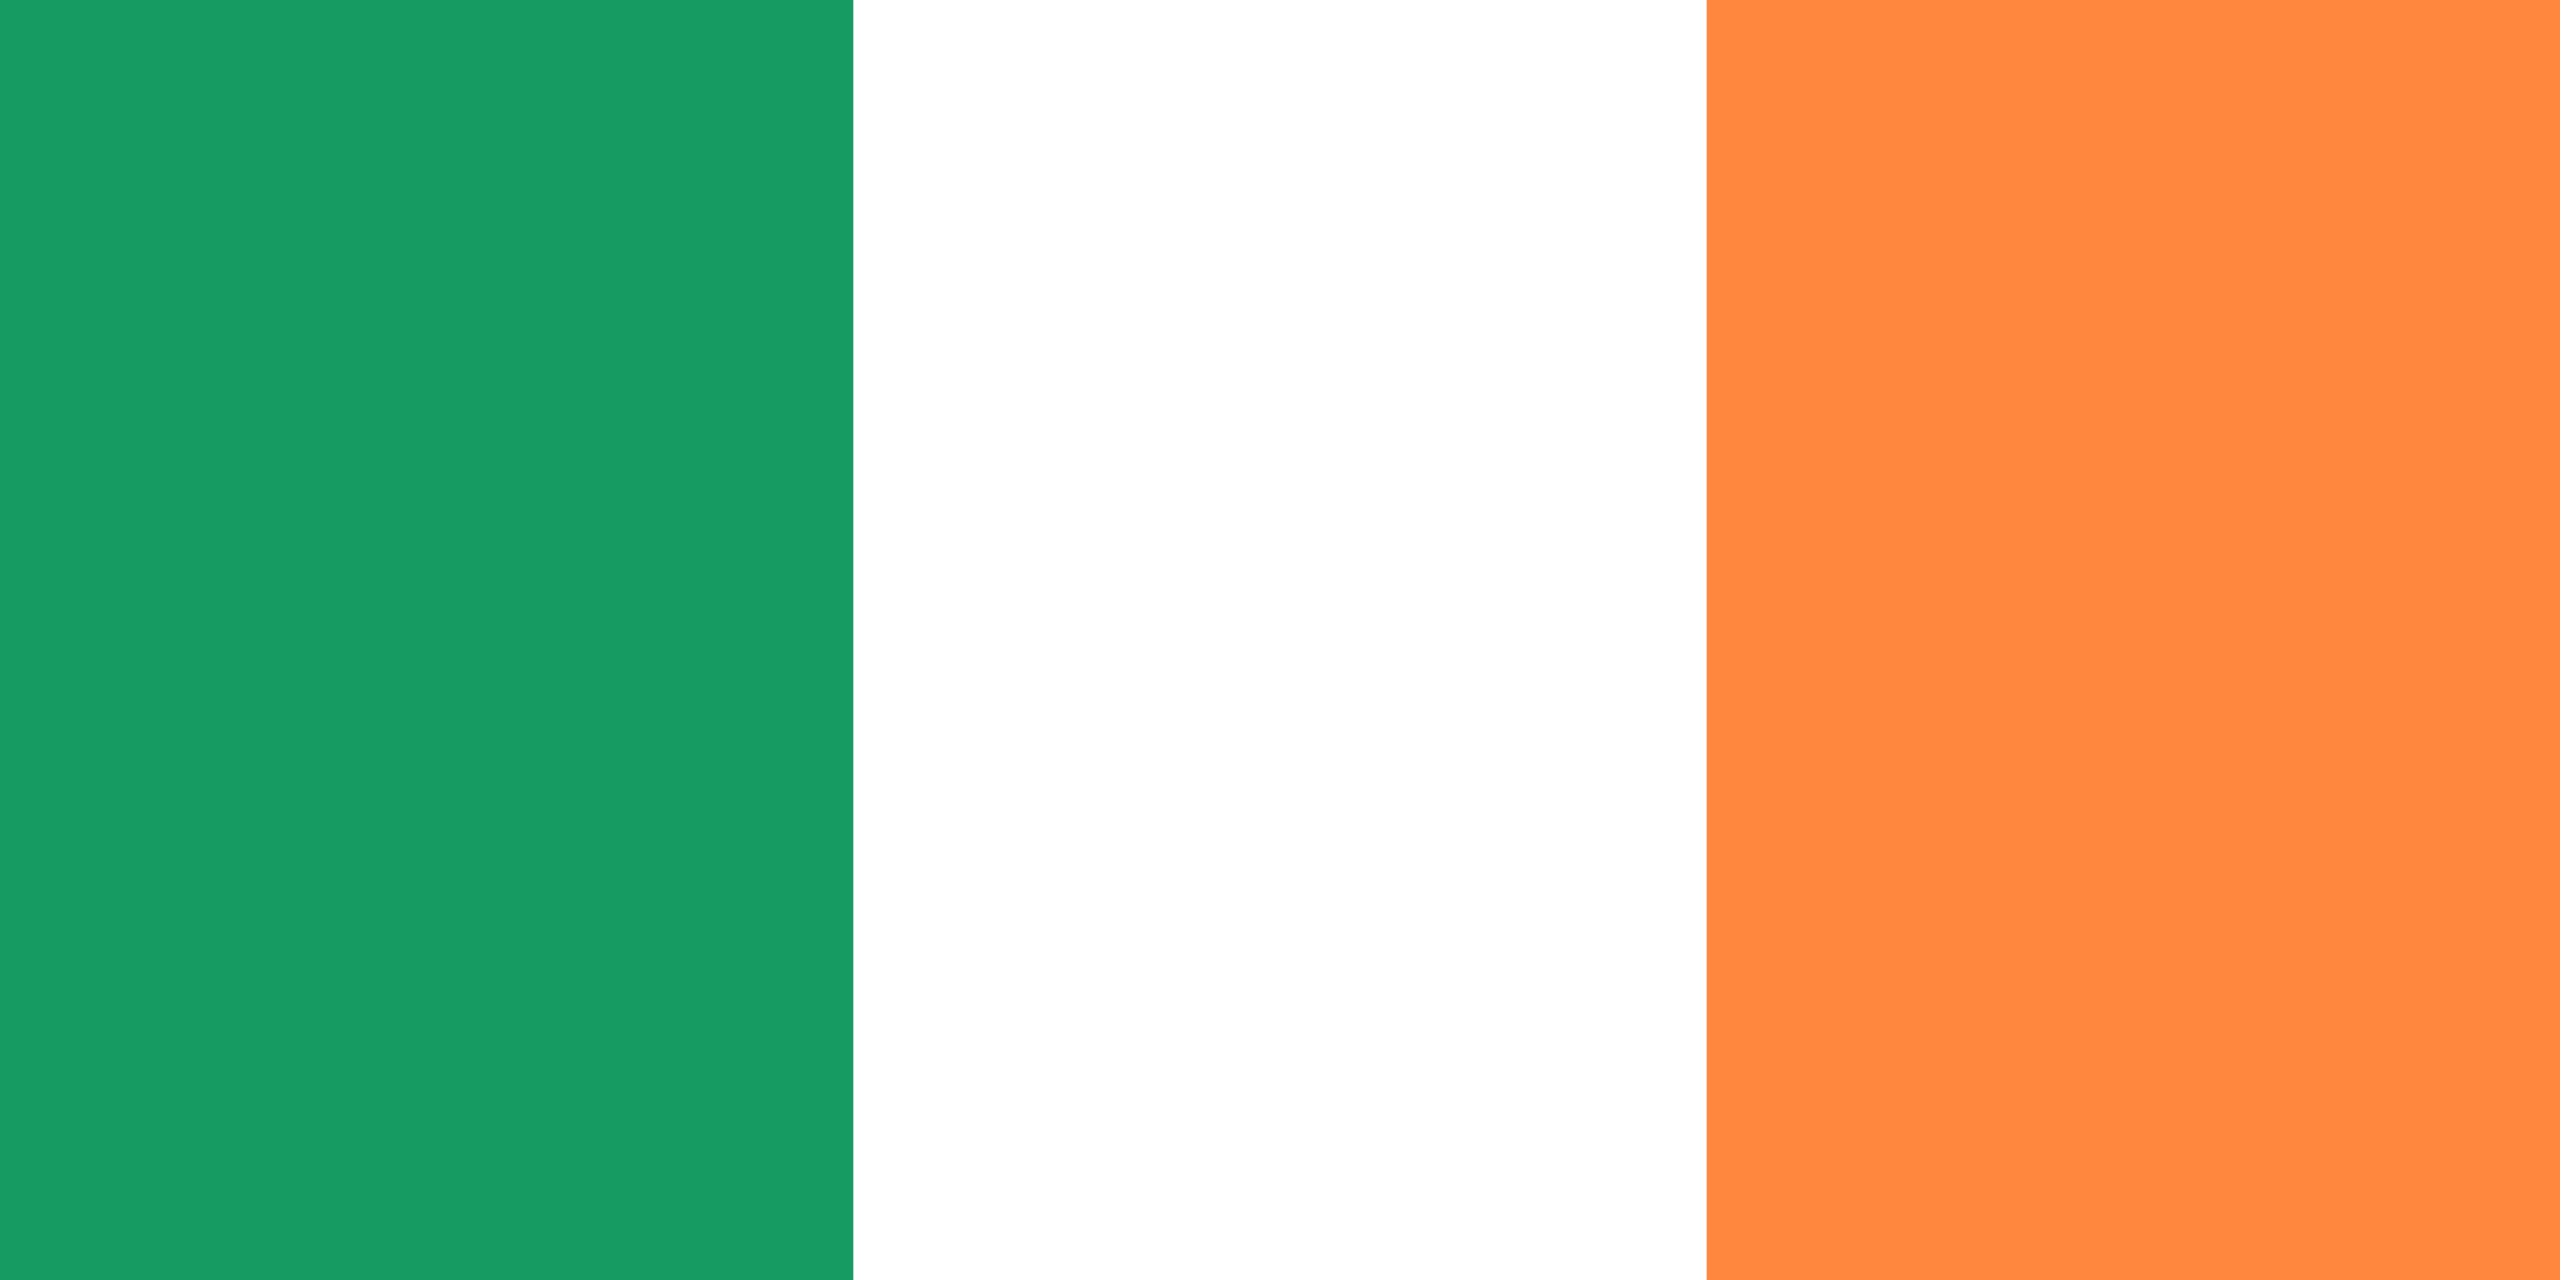 Ireland has been added to the Datacenterplatform